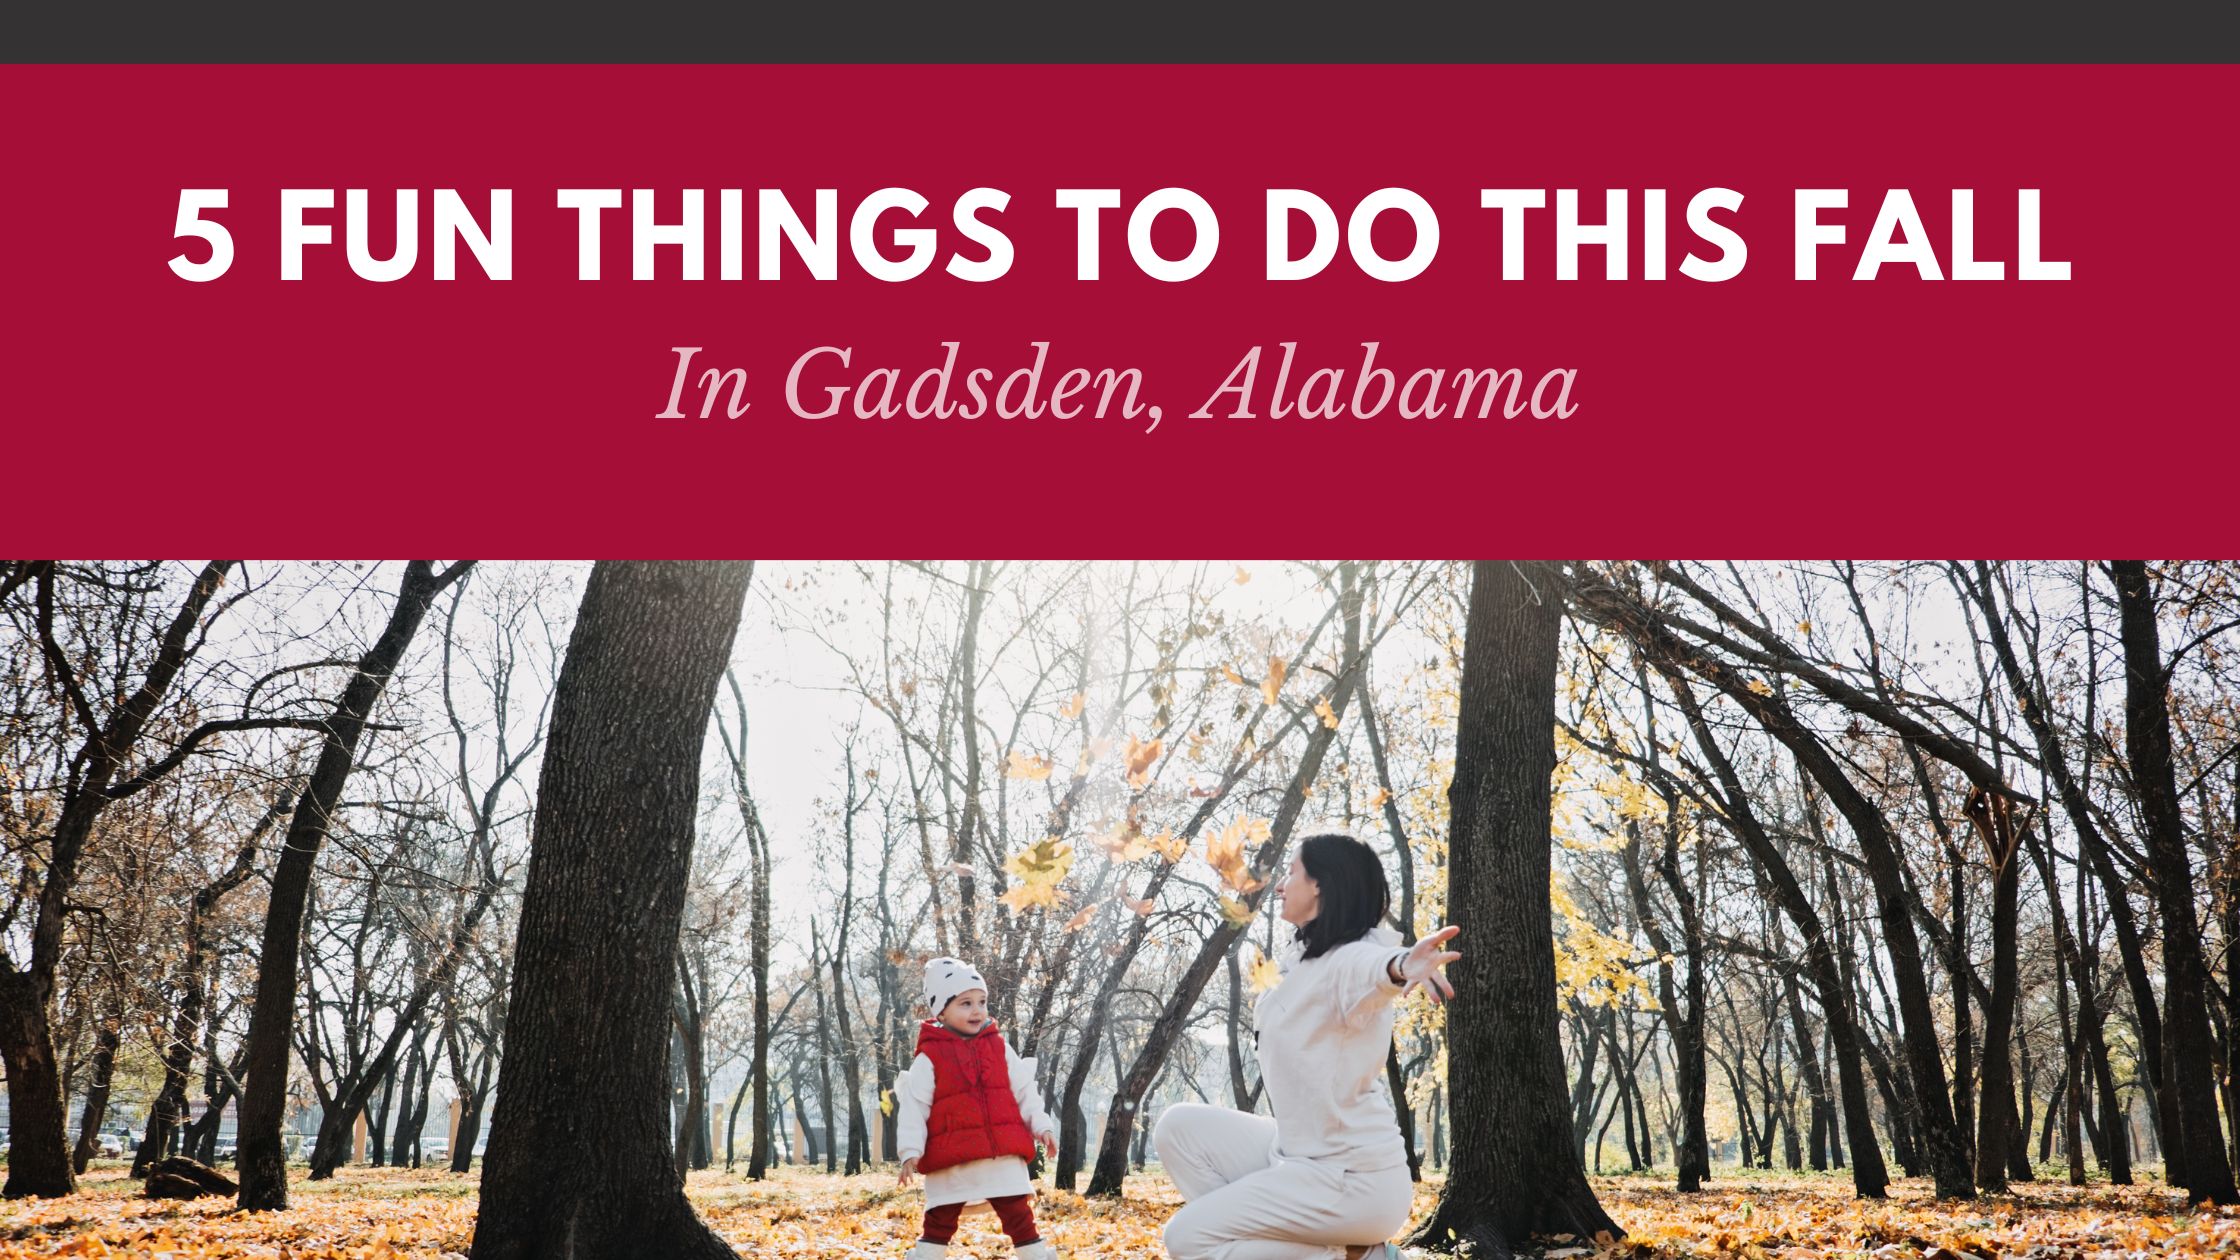 To Do This Fall In Gadsden, Alabama